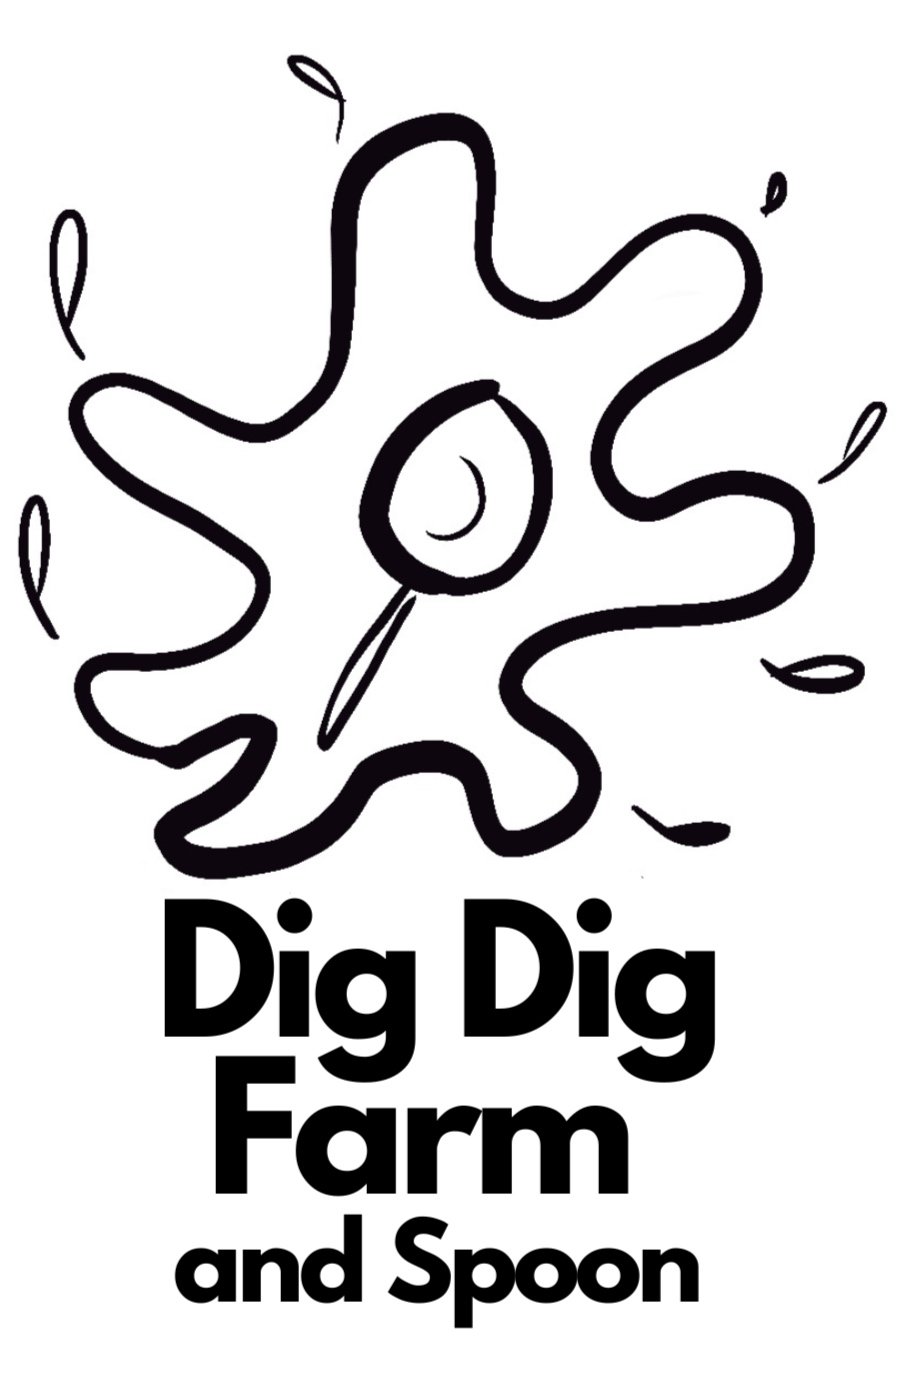 Dig Dig Farm